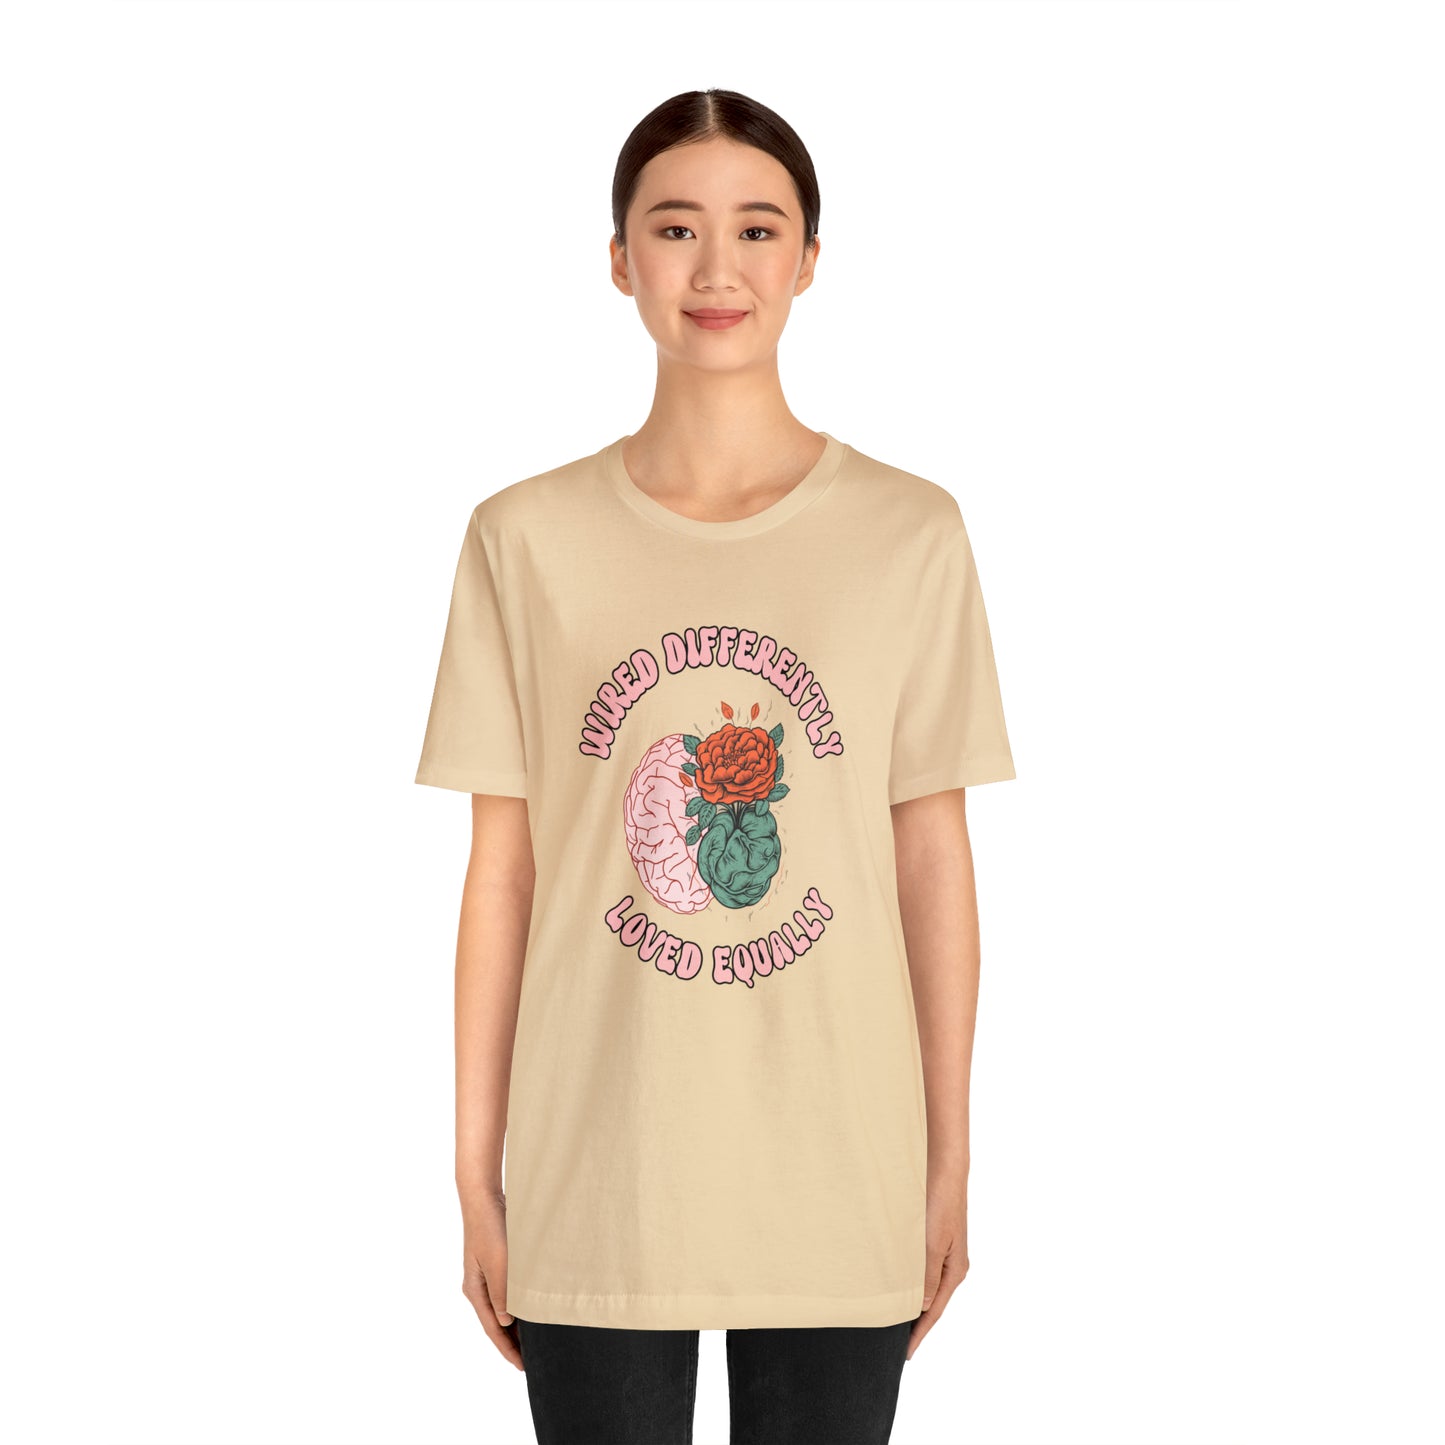 Autism Awareness Shirt, Neurodivergent Shirt, Inclusion Shirt, Mental Health, ABA Therapist Shirt, T167